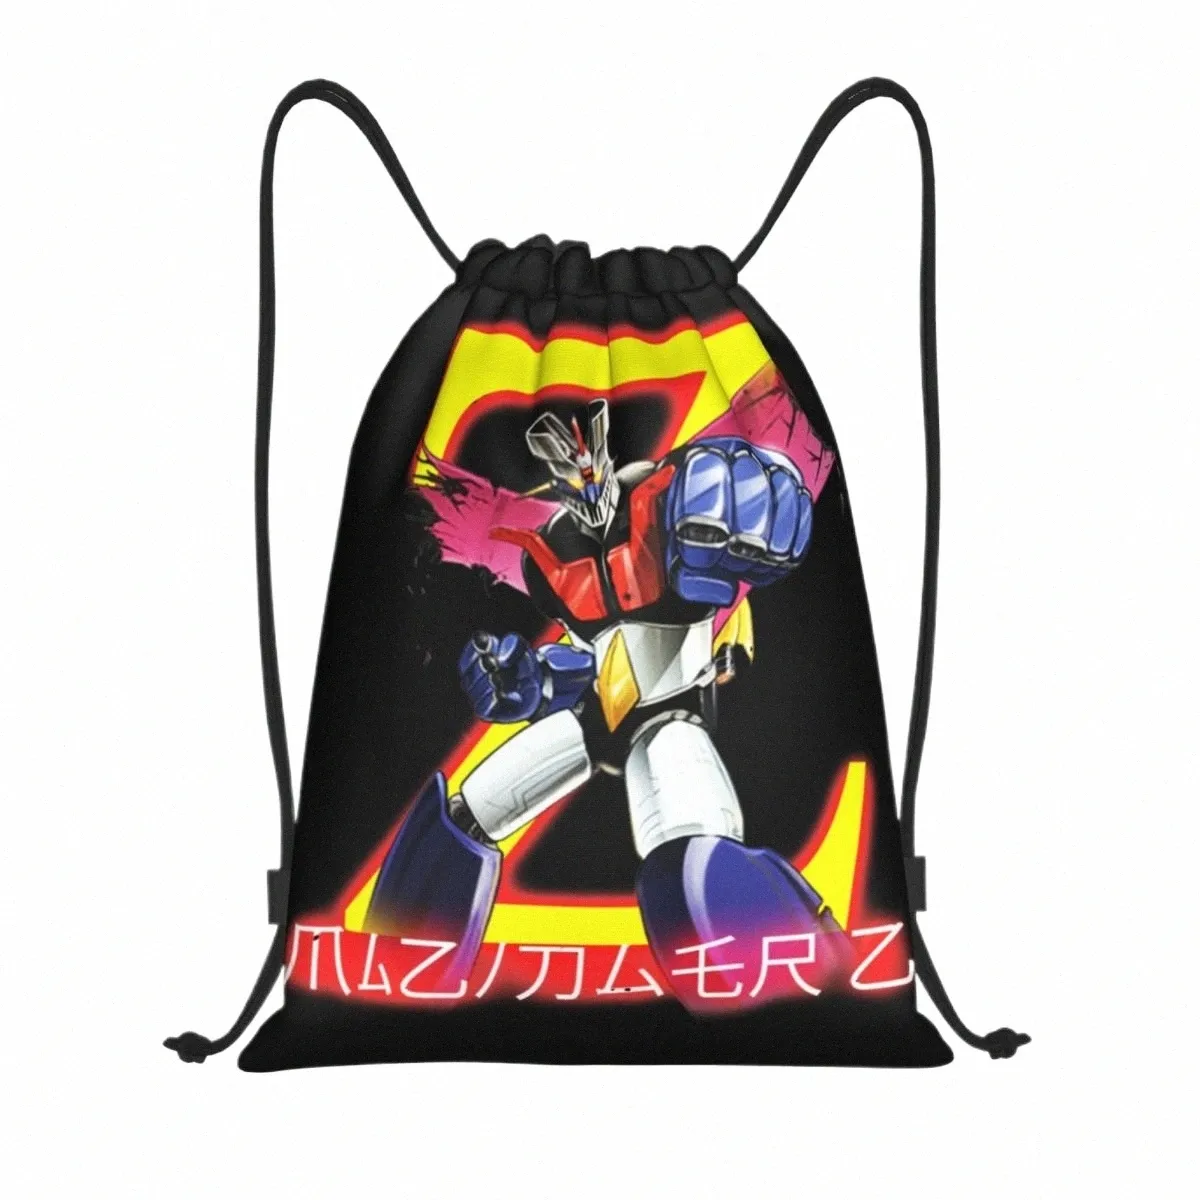 Mazinger Z Super Robot Рюкзак Спортивная спортивная сумка на шнурке Рюкзак для тренировок O1qw#